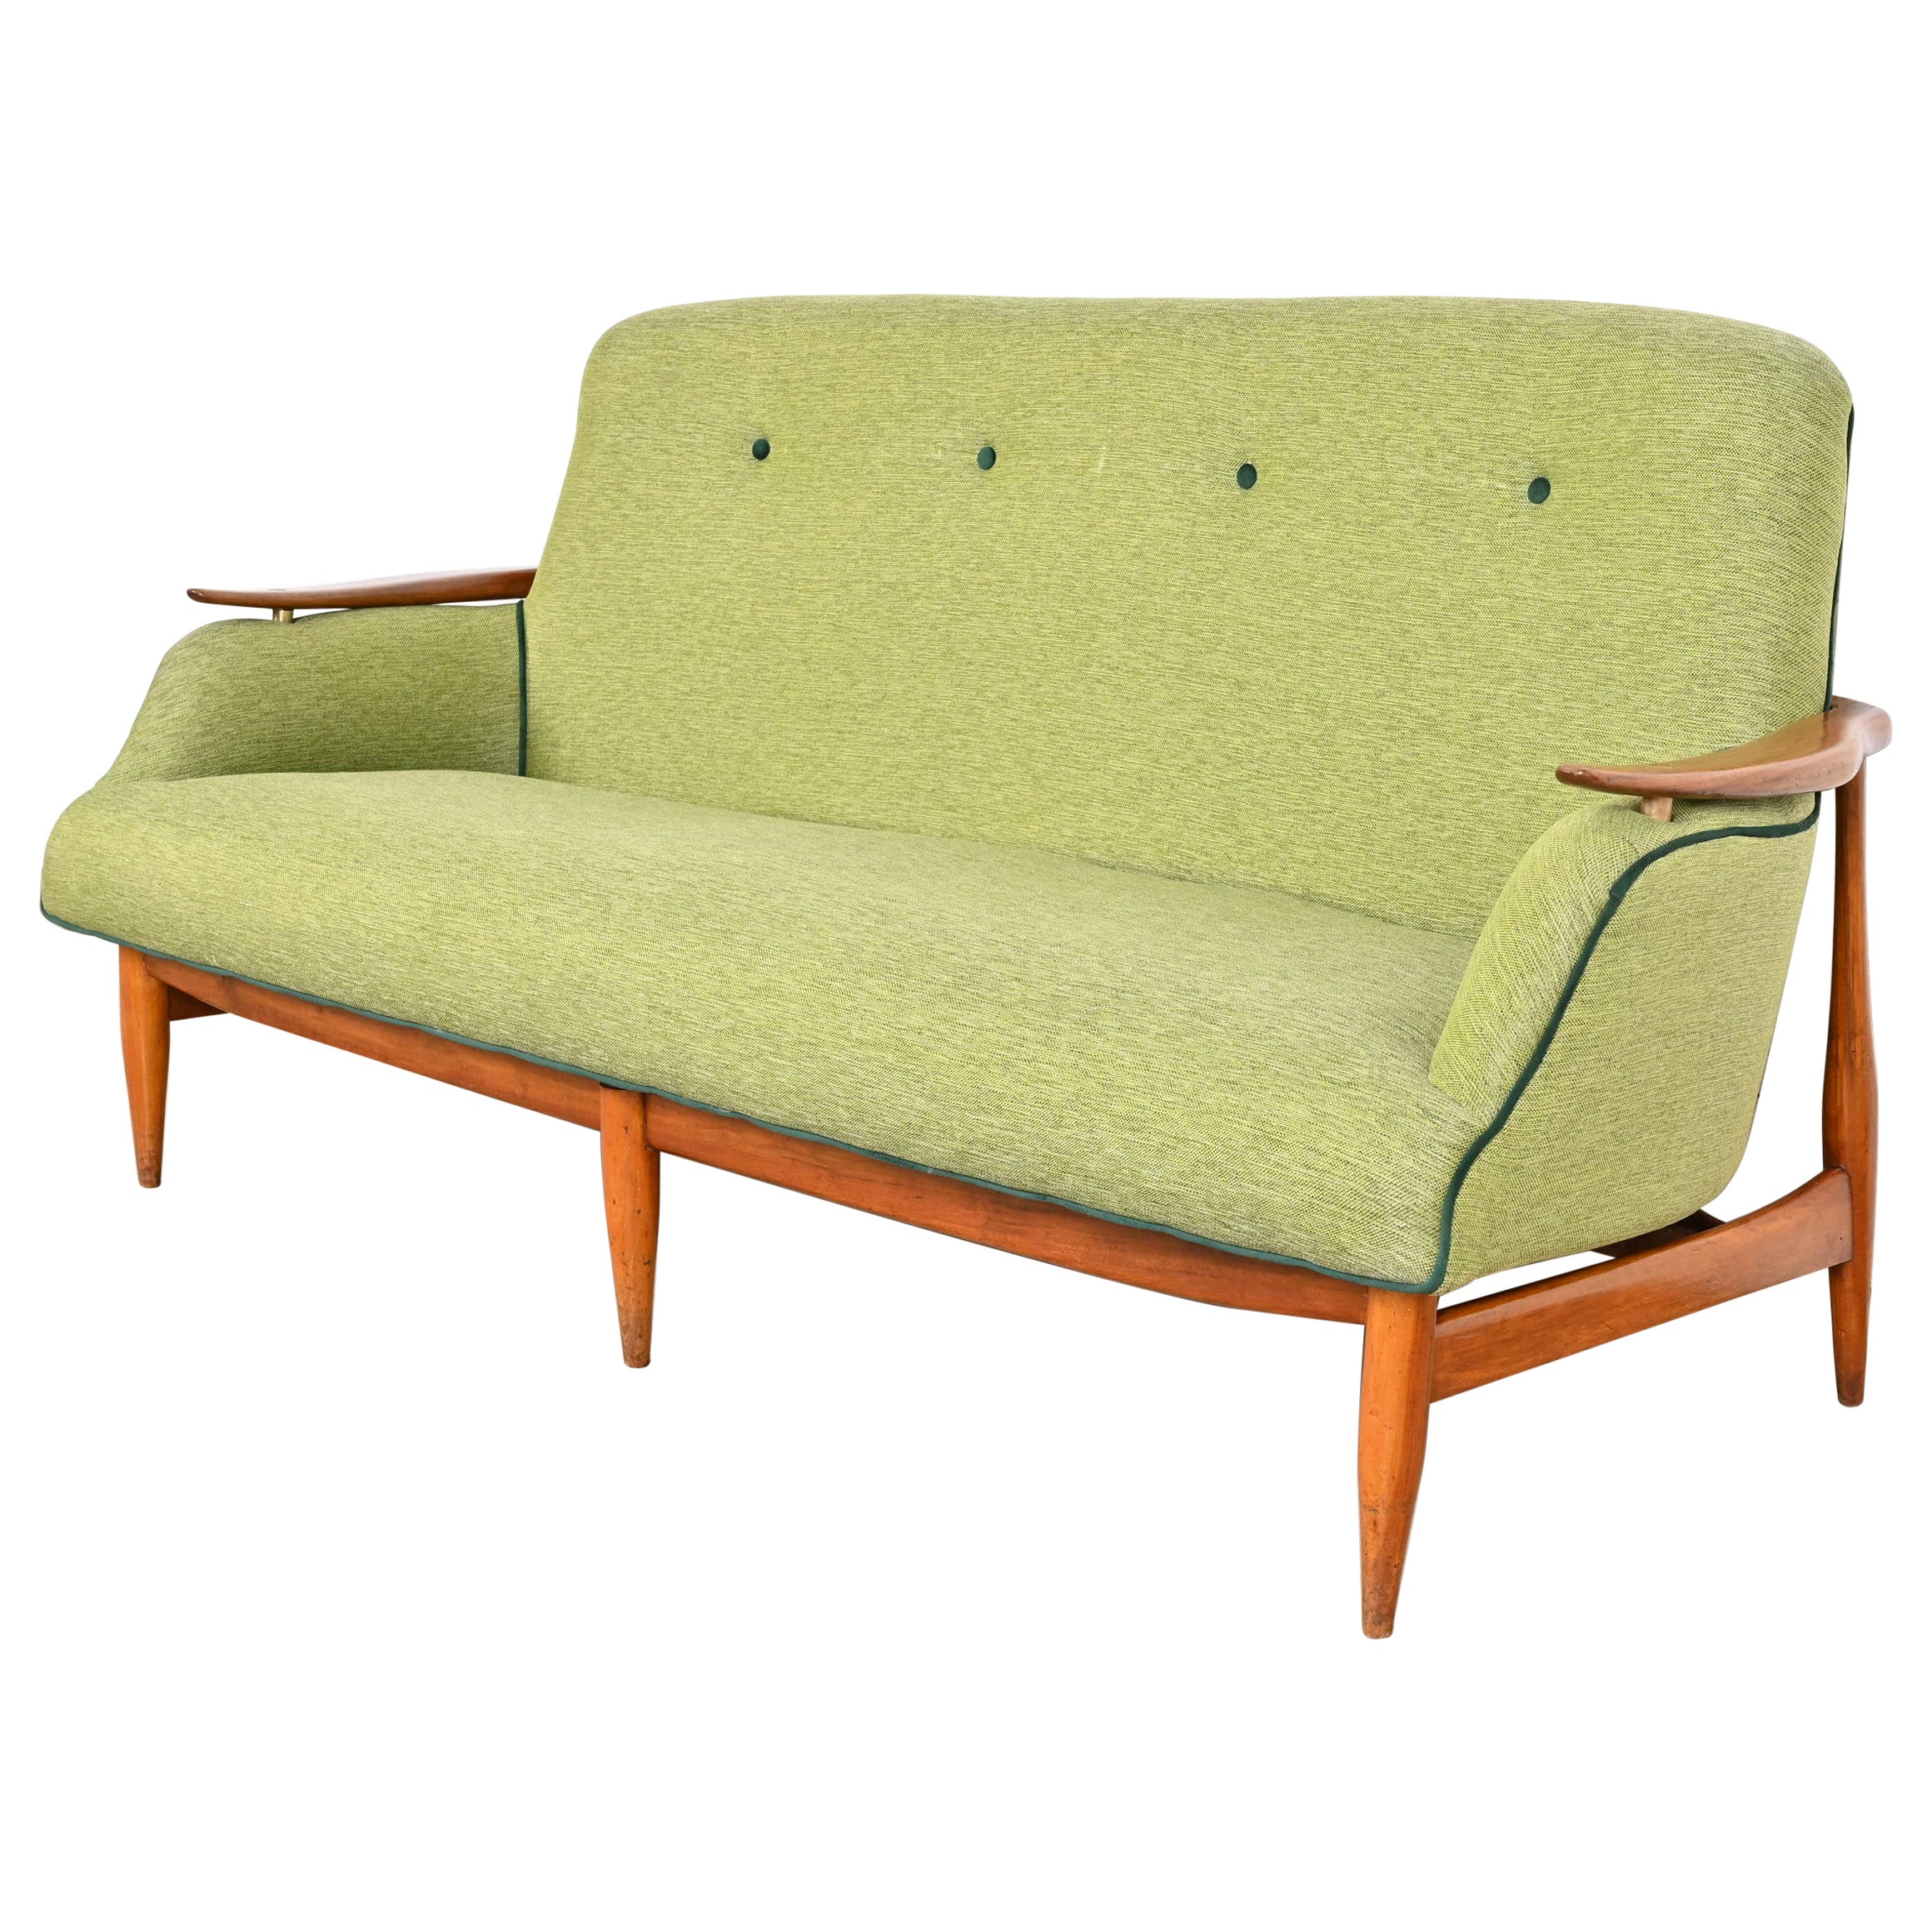 Finn Juhl Dänisches modernes gepolstertes, geformtes Teakholz-Sofa, 1950er Jahre